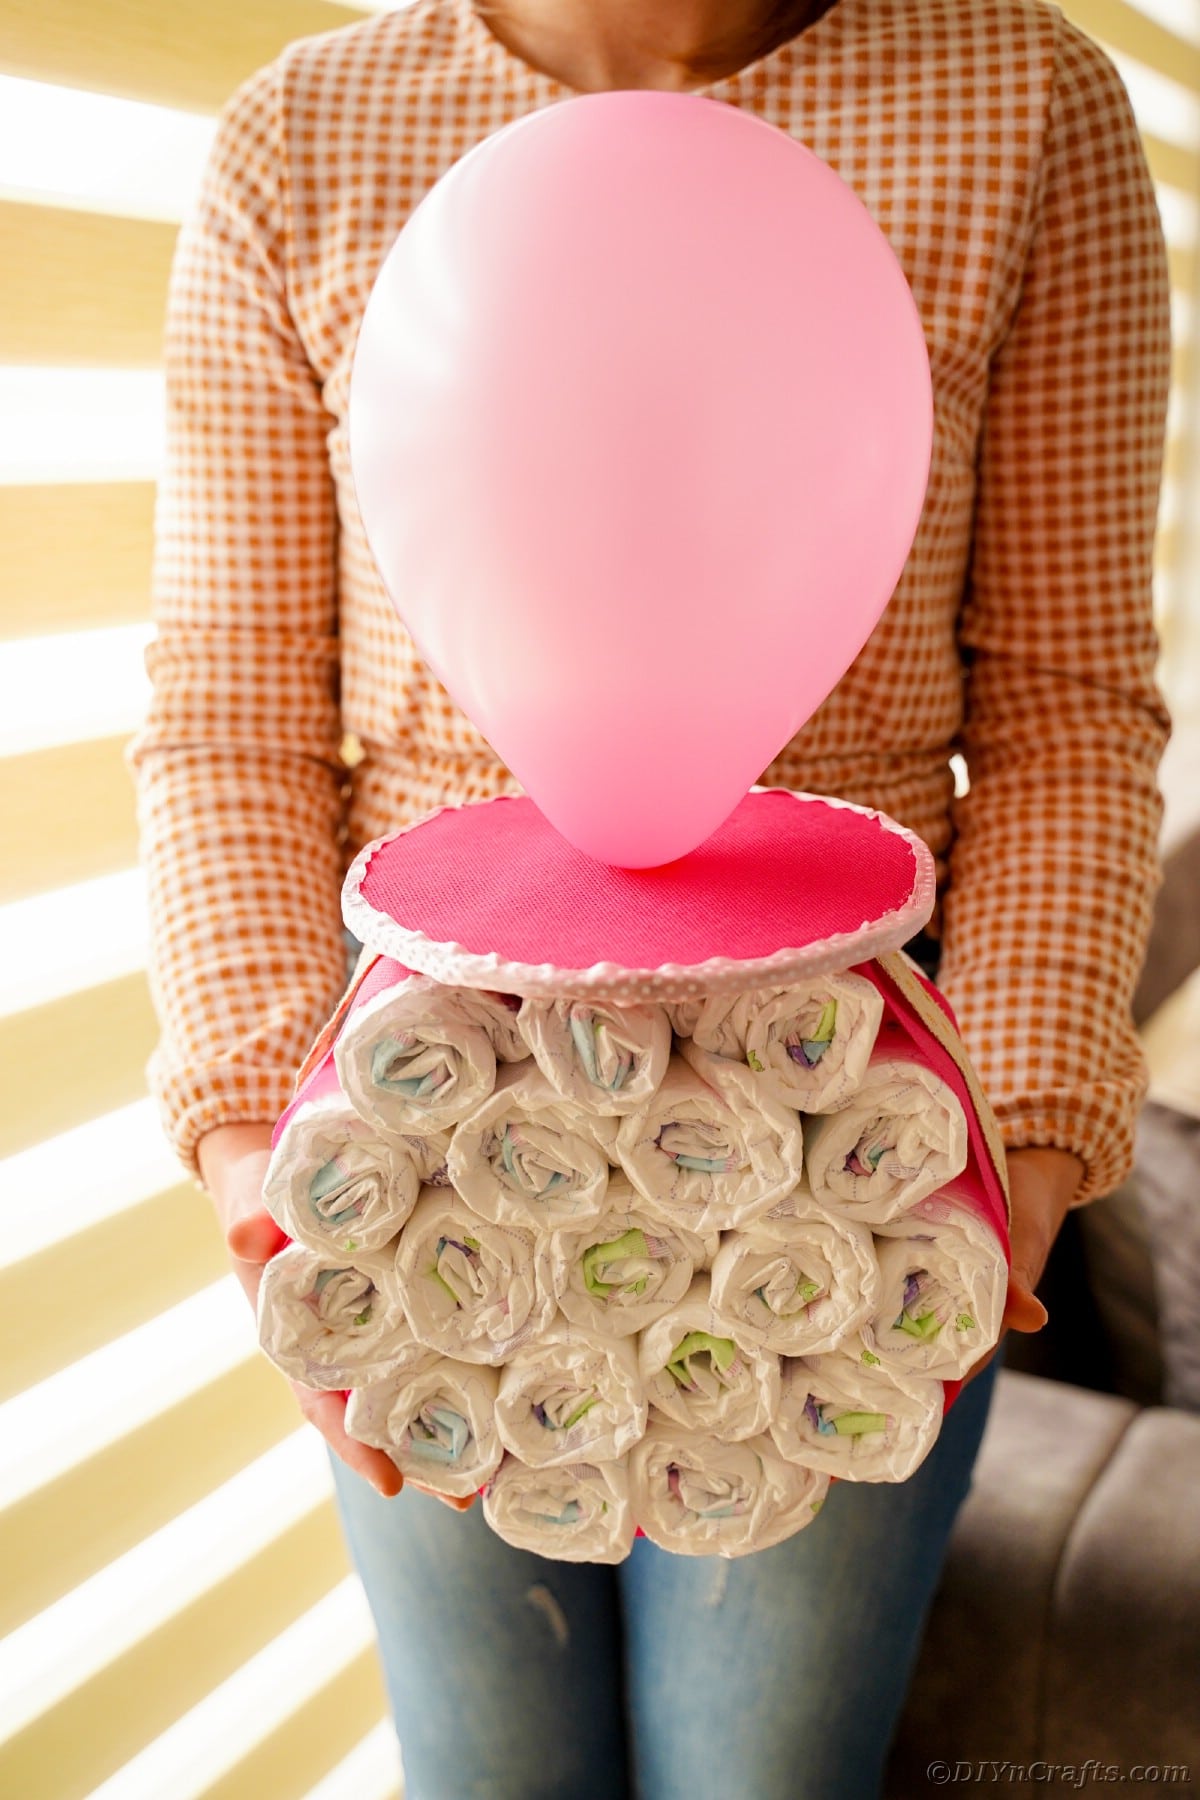 Frau mit rosa Ballonwindelkuchen 